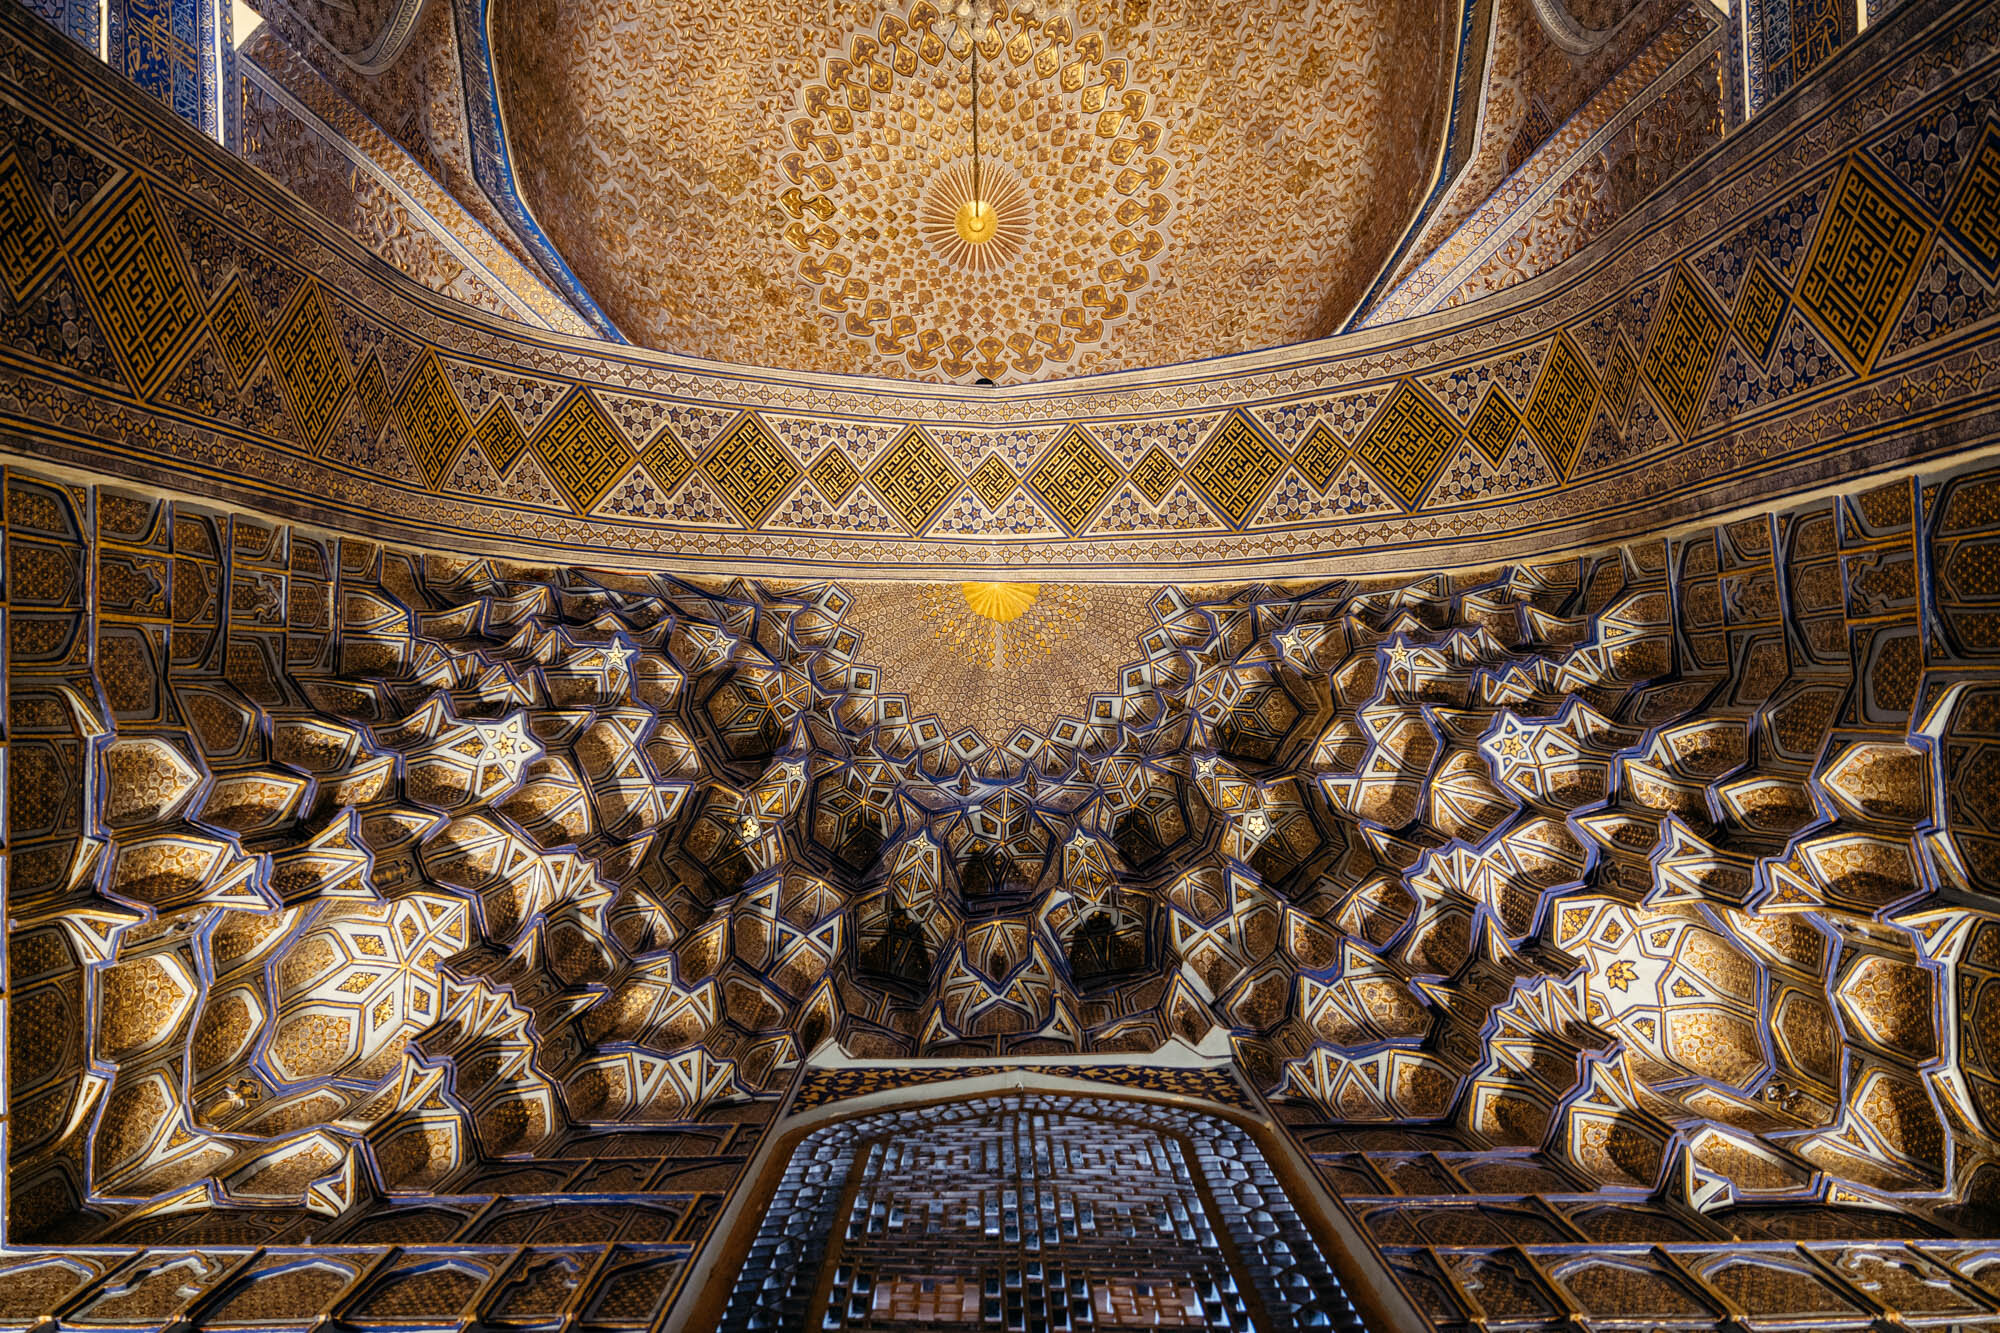  Ceiling details from the Guri Amir Mausoleum, Samarkand 